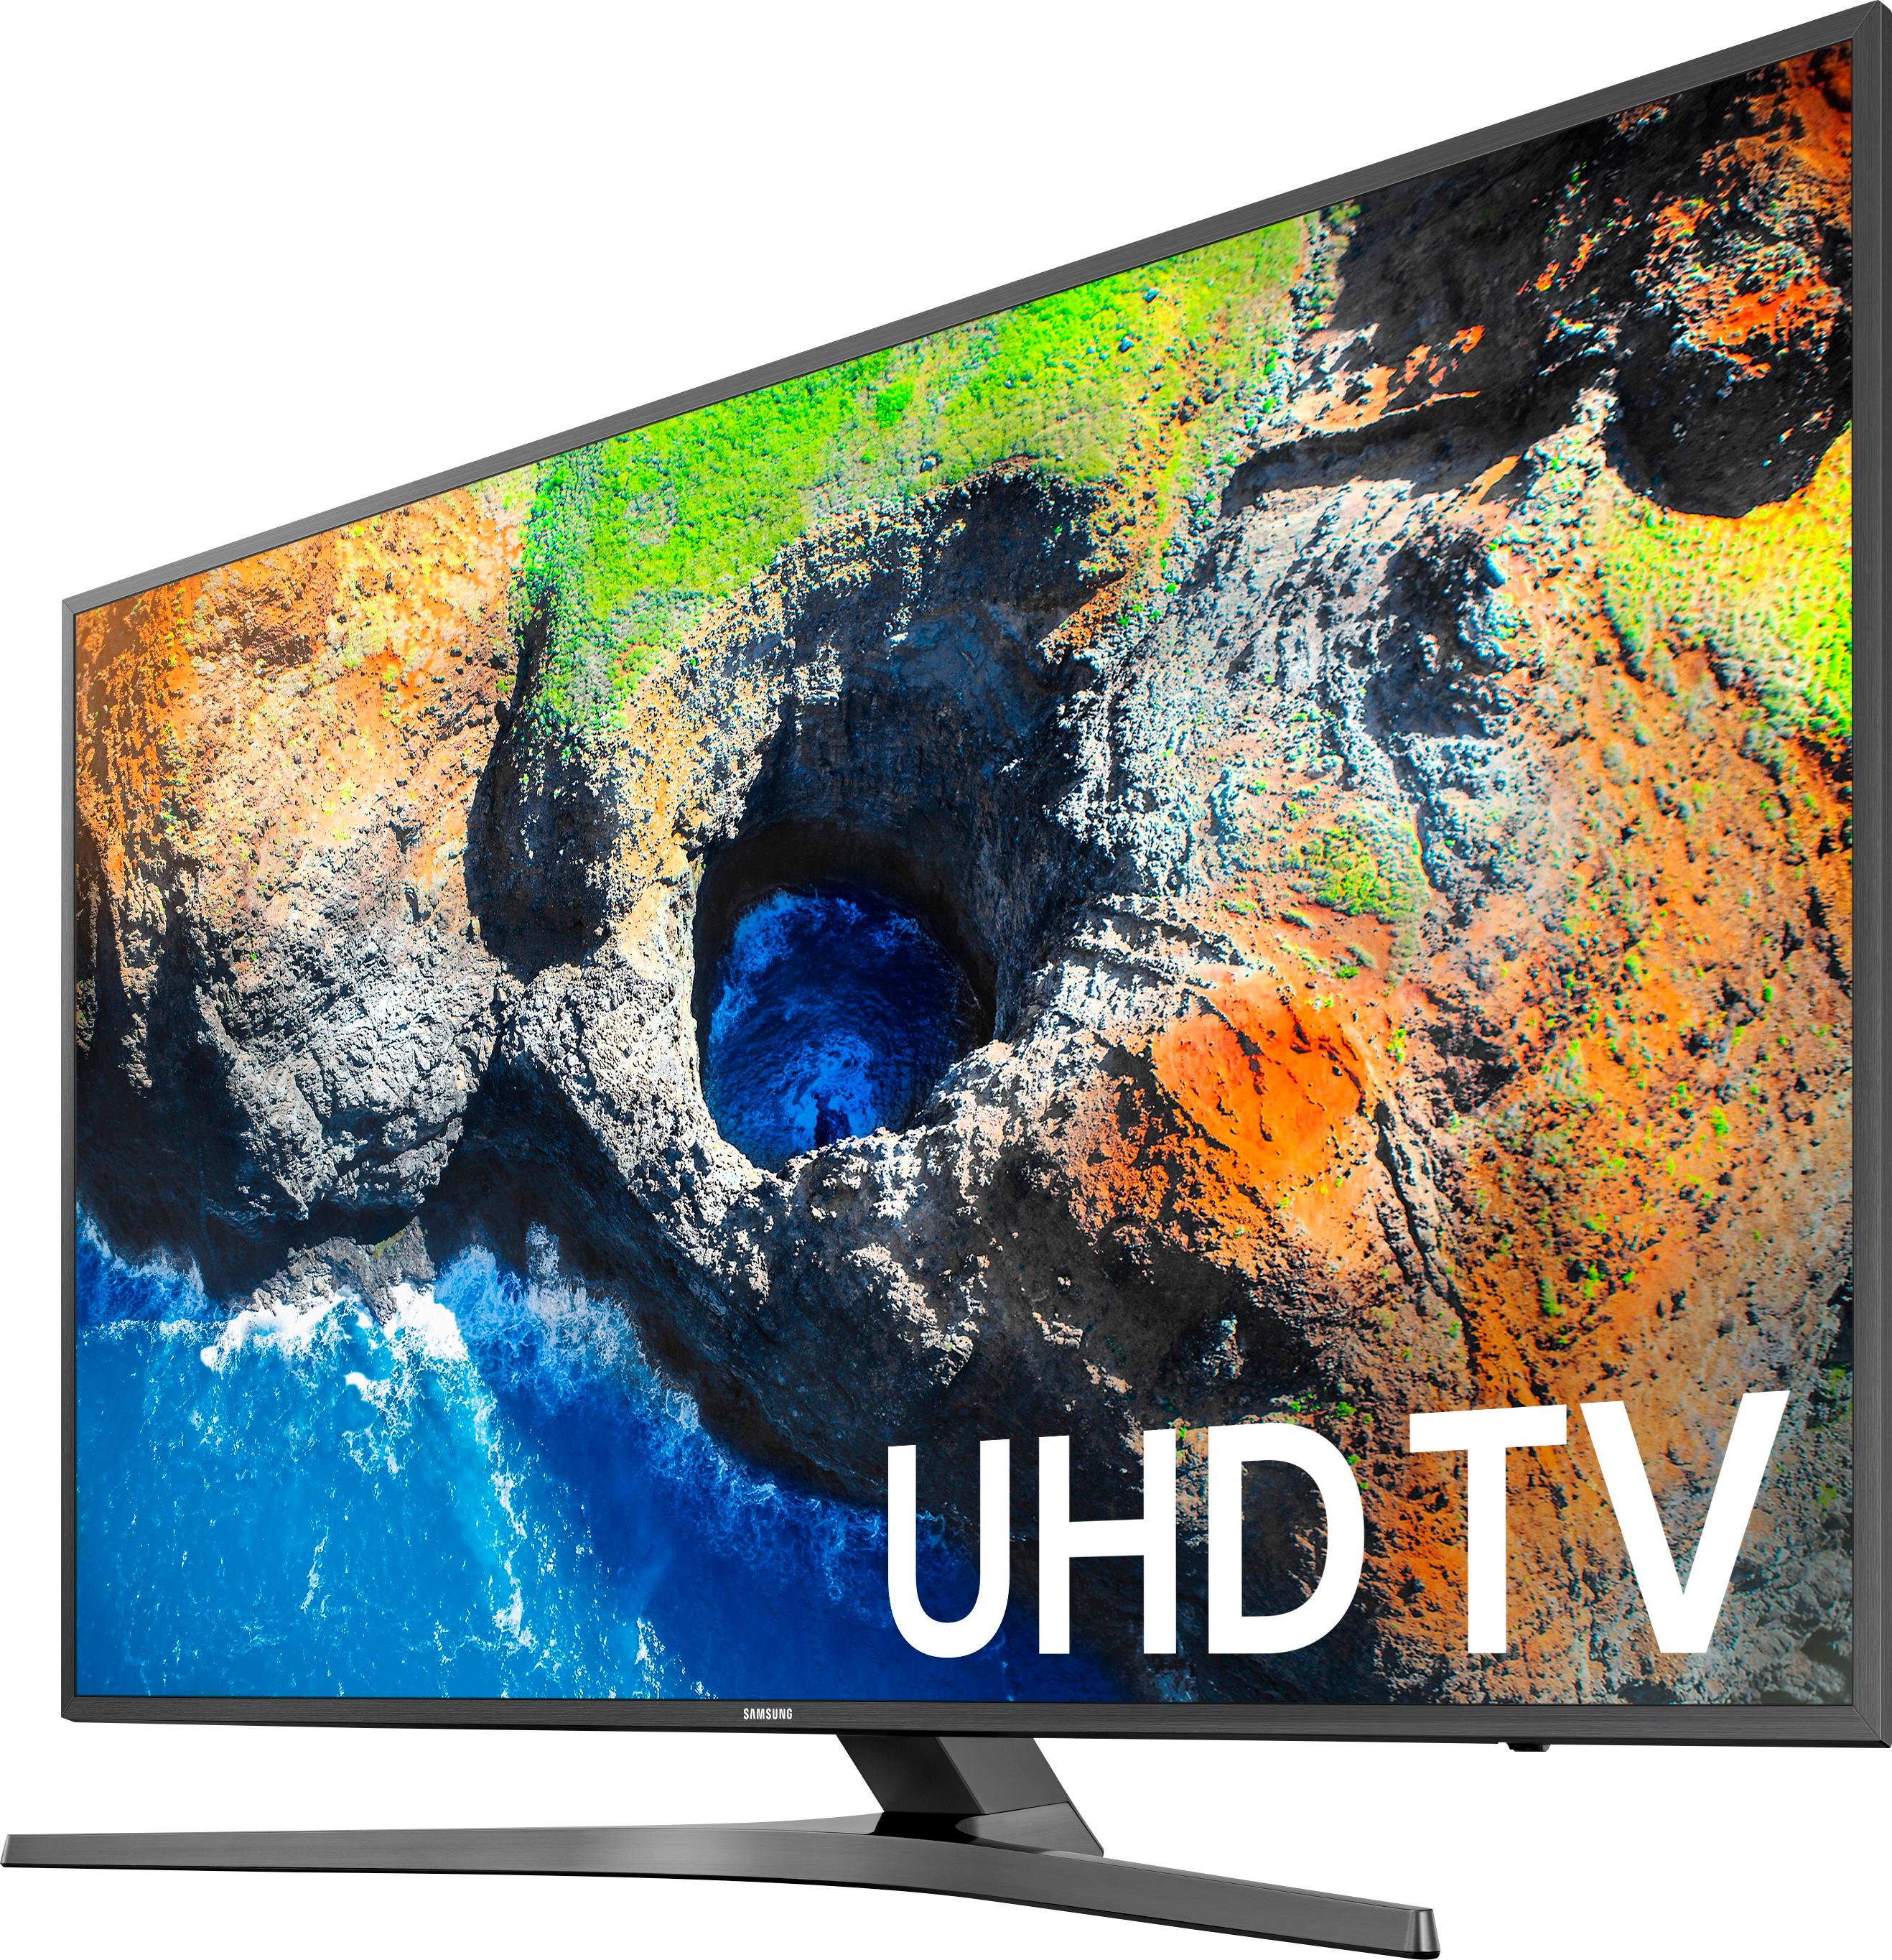 Haier U49H7000 49 Inch UHD Smart TV 